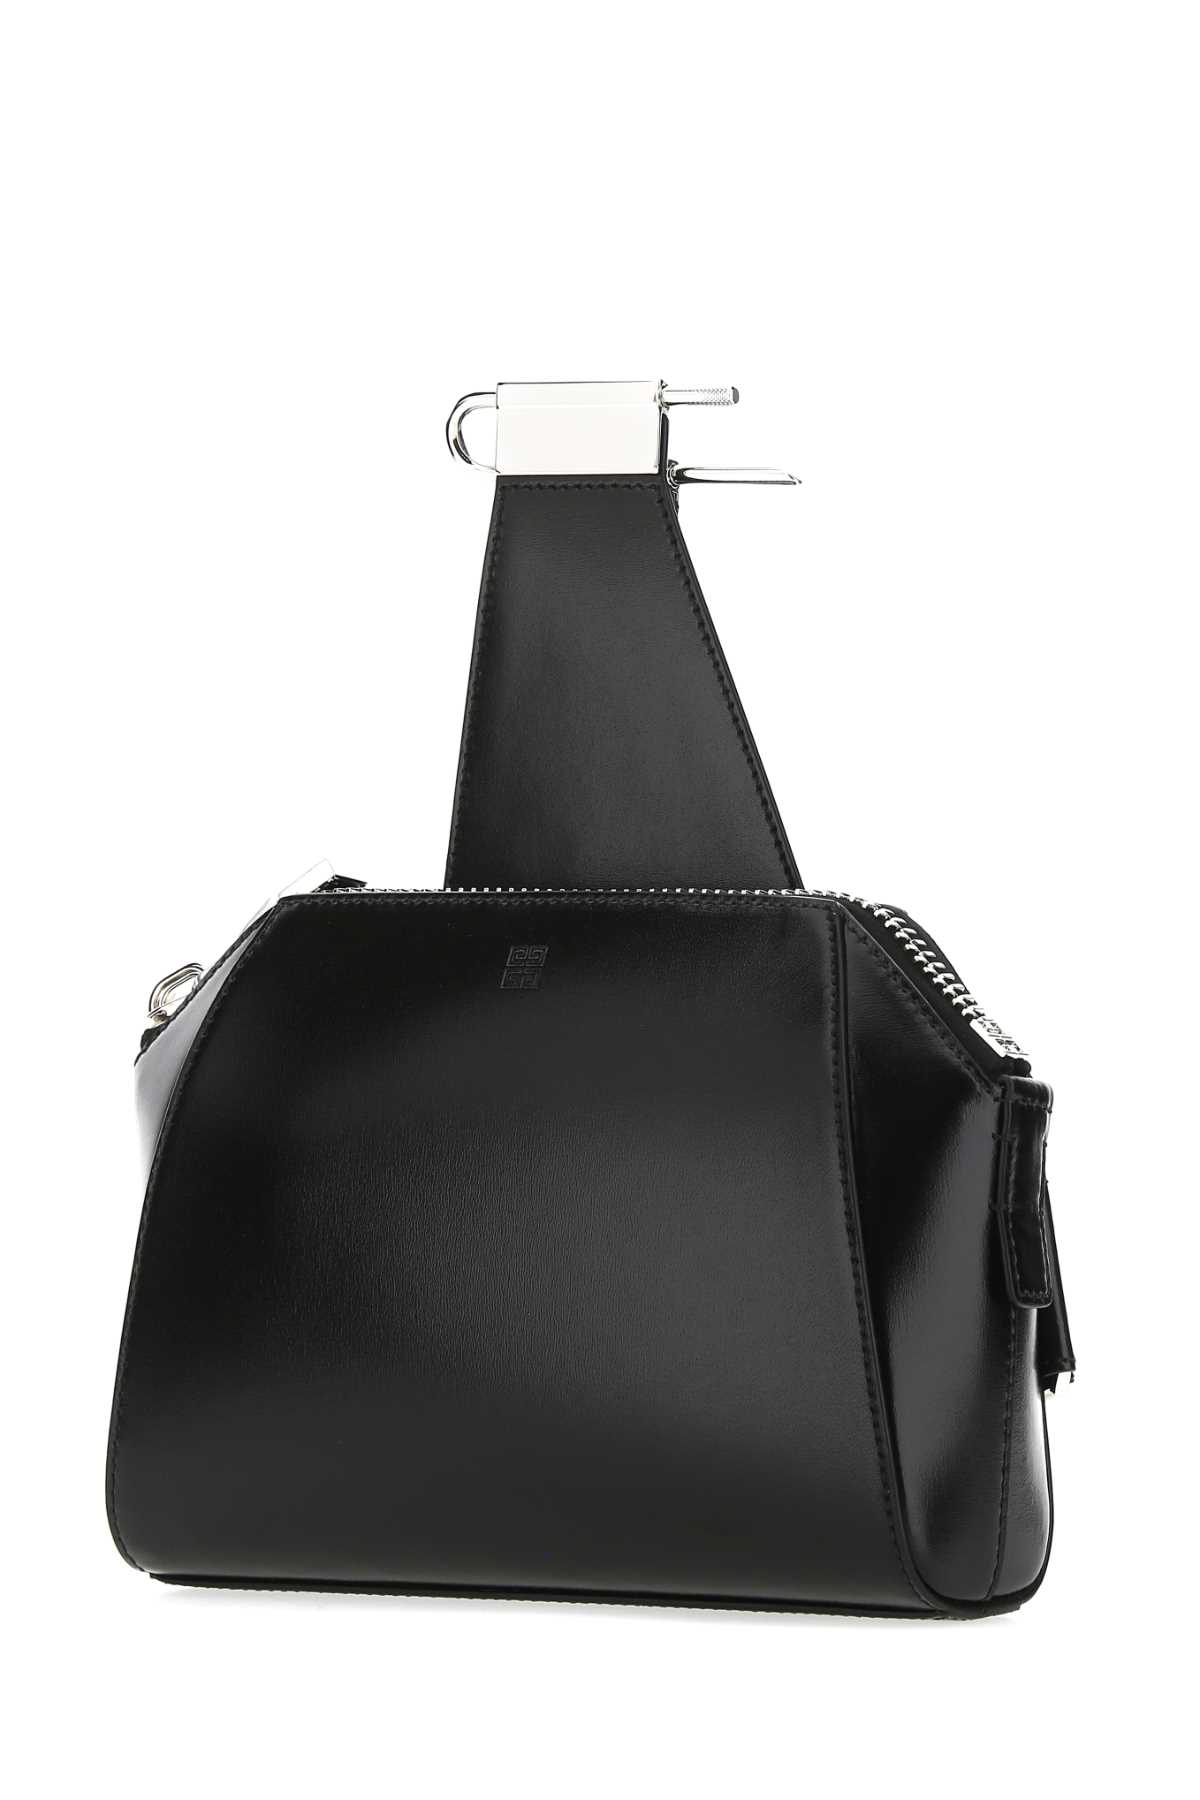 Givenchy Black Leather Small Antigona Crossbody Bag In 001